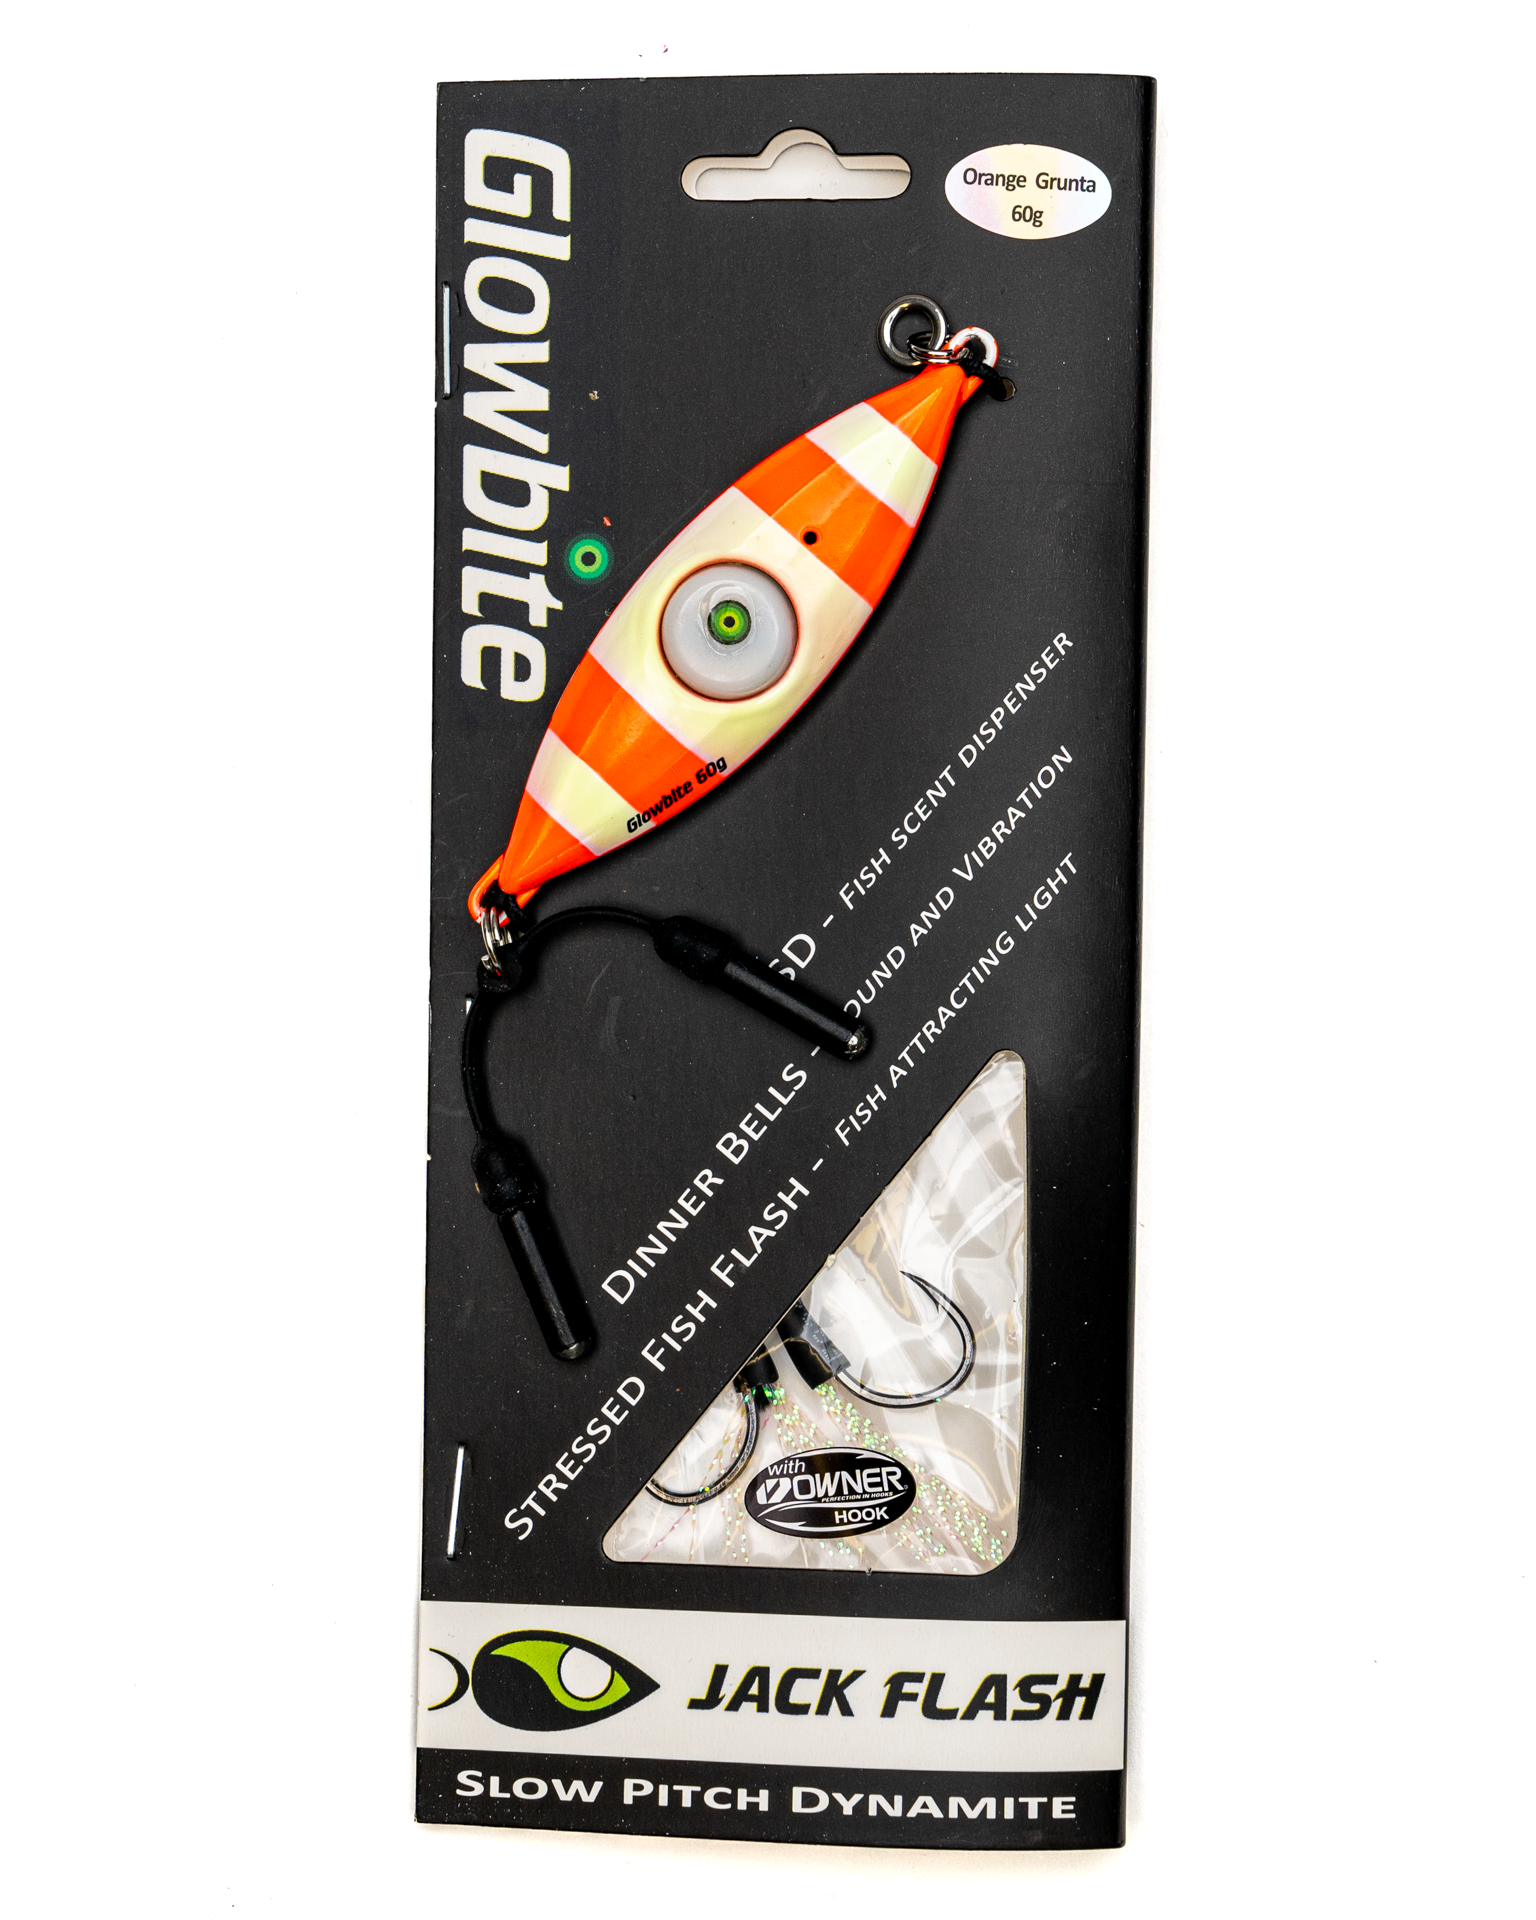 Slow Pitch Jig Glowbite Jack Flash – Orange Grunta - 60g